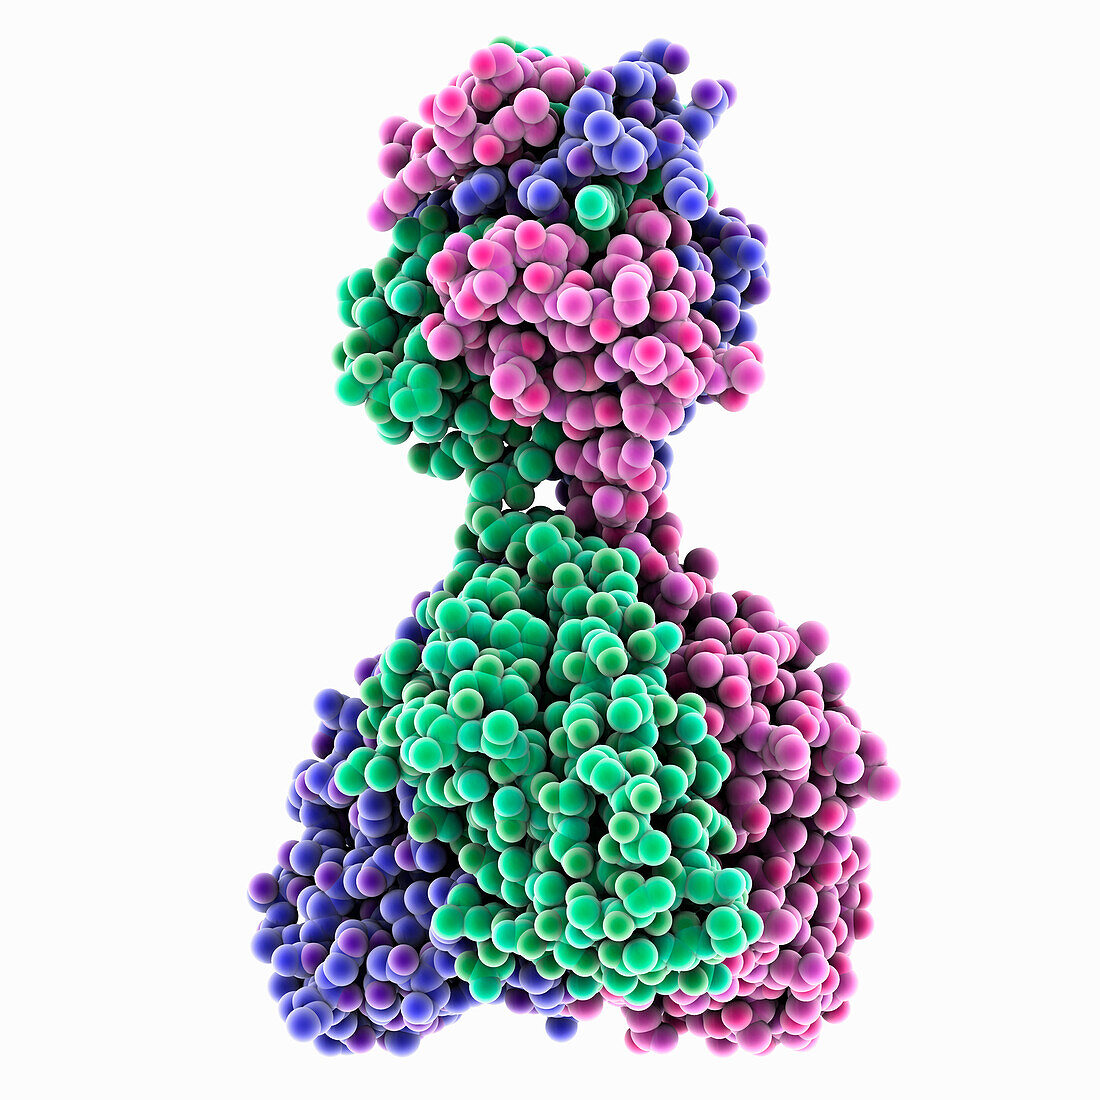 Zamilon virus protein Zav_19, molecular model